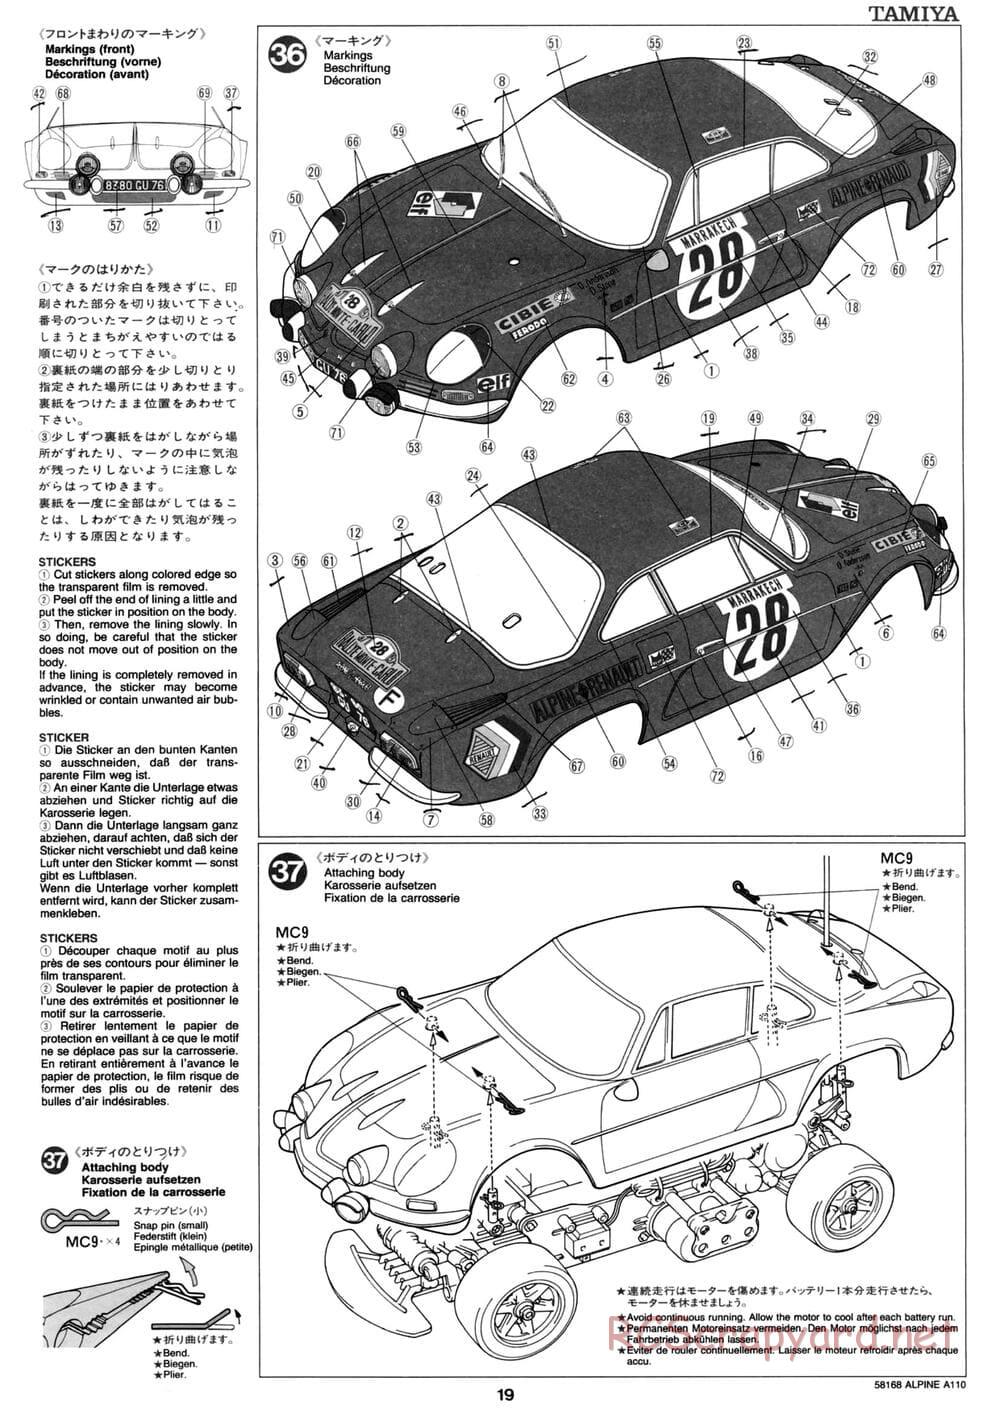 Tamiya - Alpine A110 - M02 Chassis - Manual - Page 19